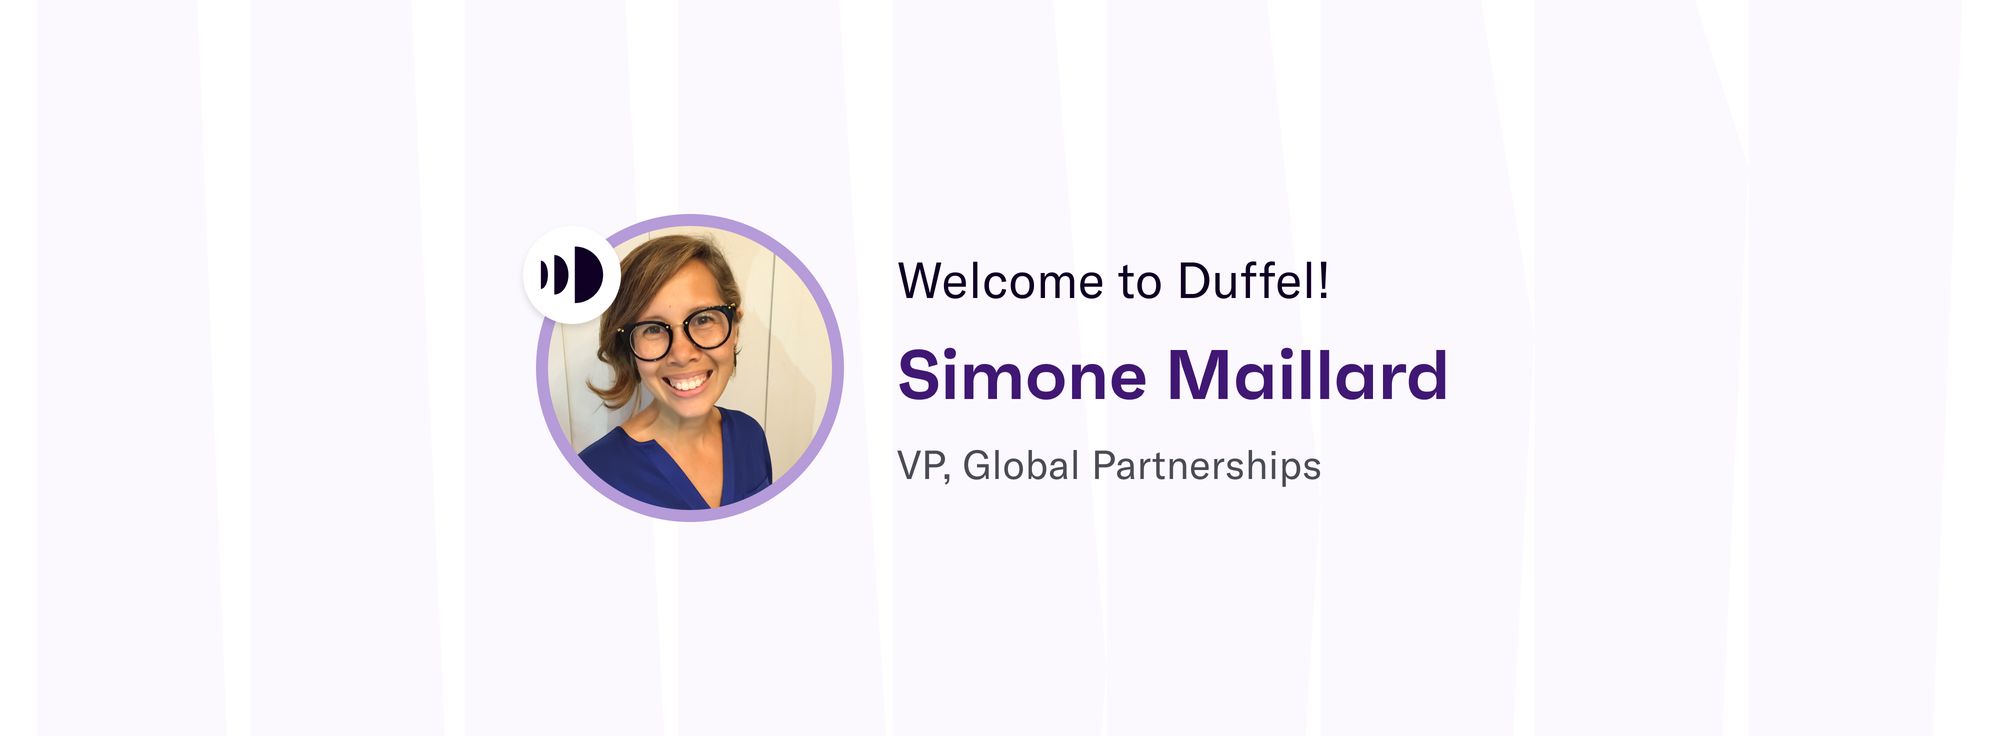 Simone Maillard joins as VP, Global Partnerships